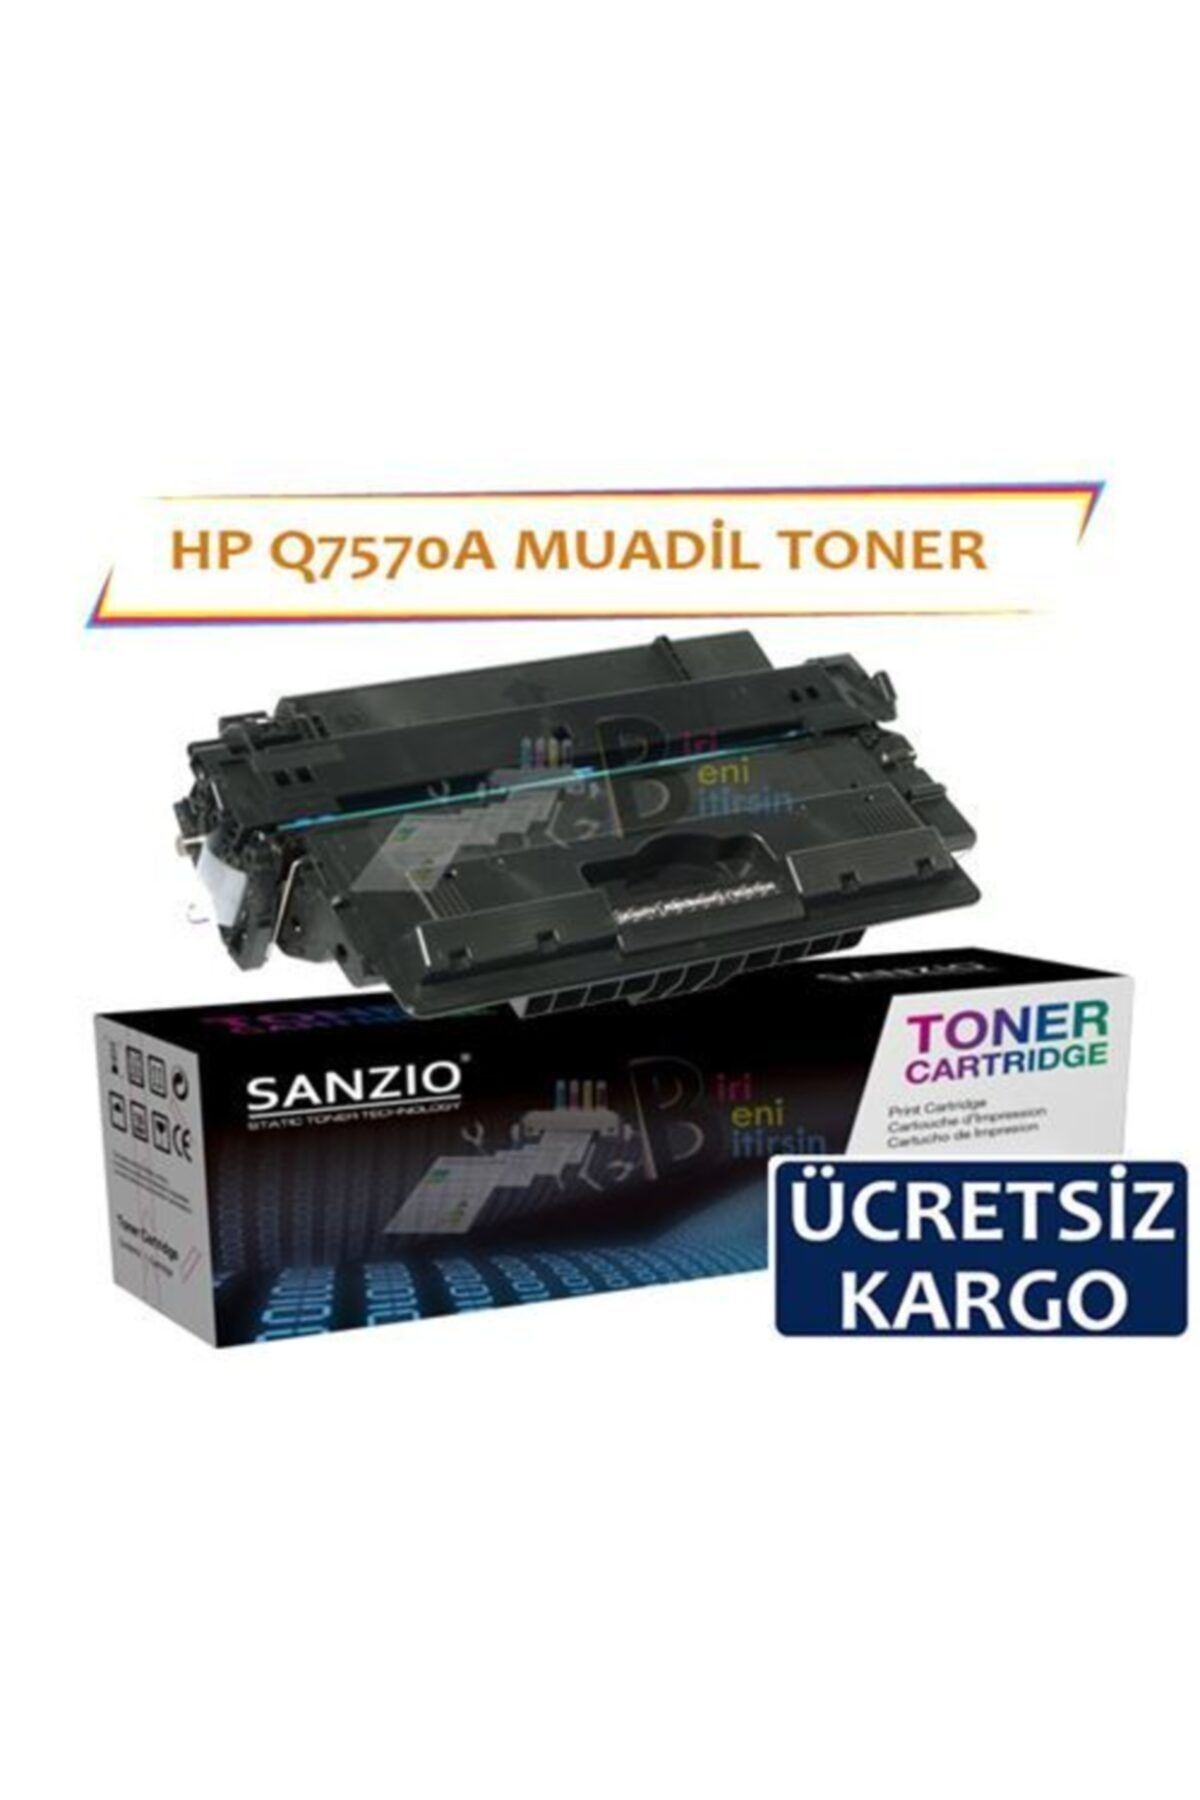 BBB Hp Q7570a Muadil Toner 70a Laserjet M5025 M5035